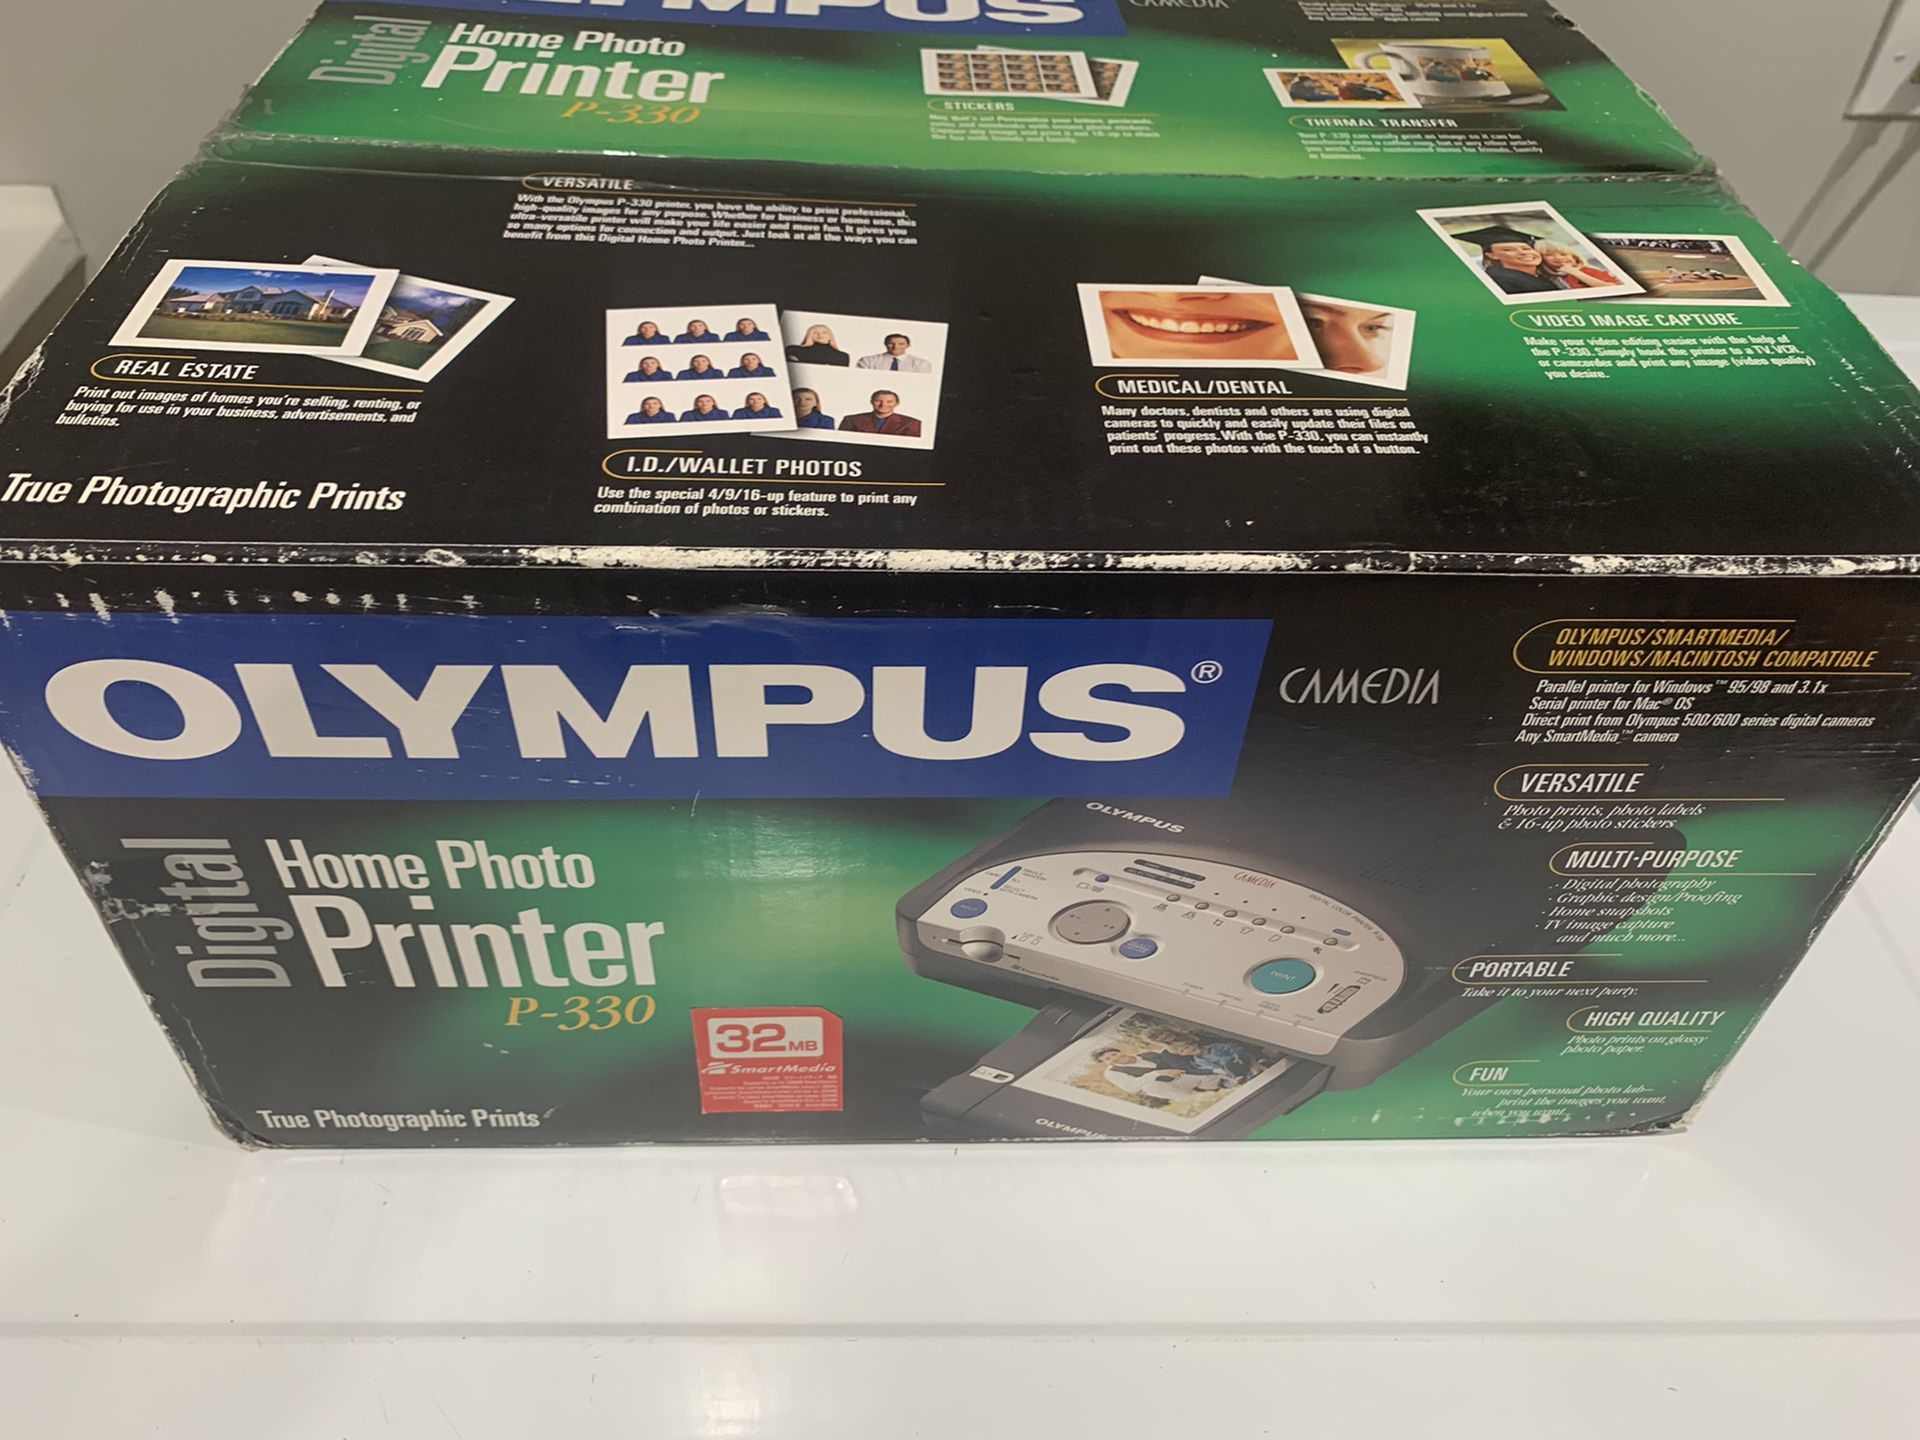 Olympus Digital Home Photo Printer P-330